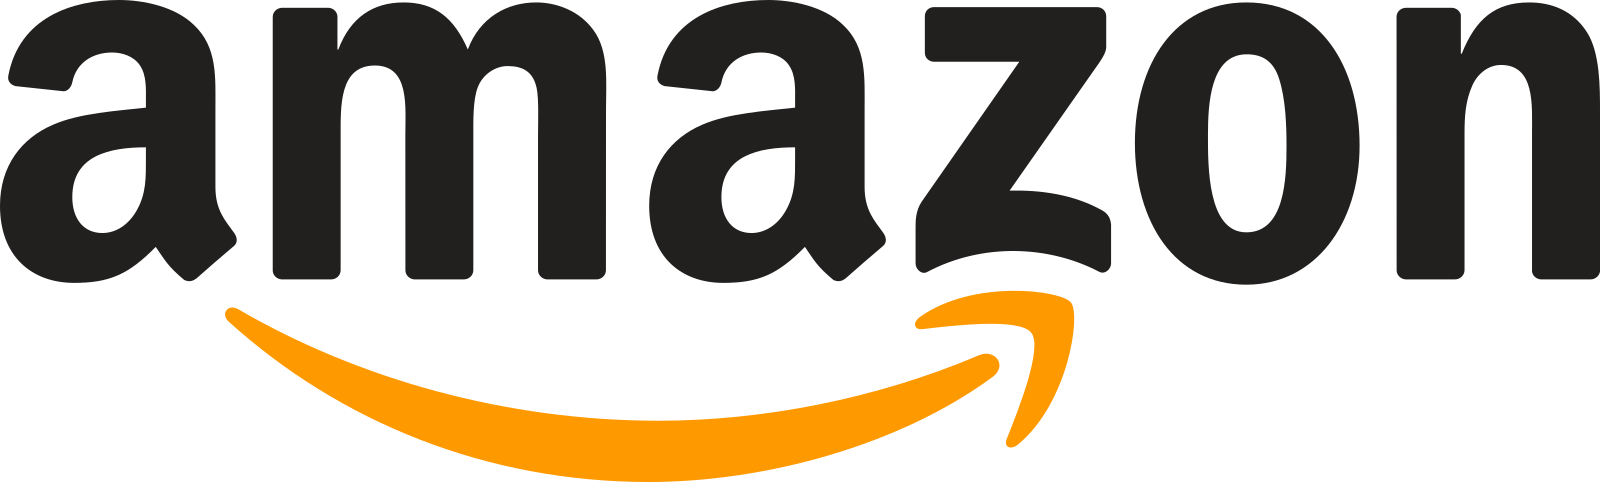 amazon logo 4 - Amazon Logo